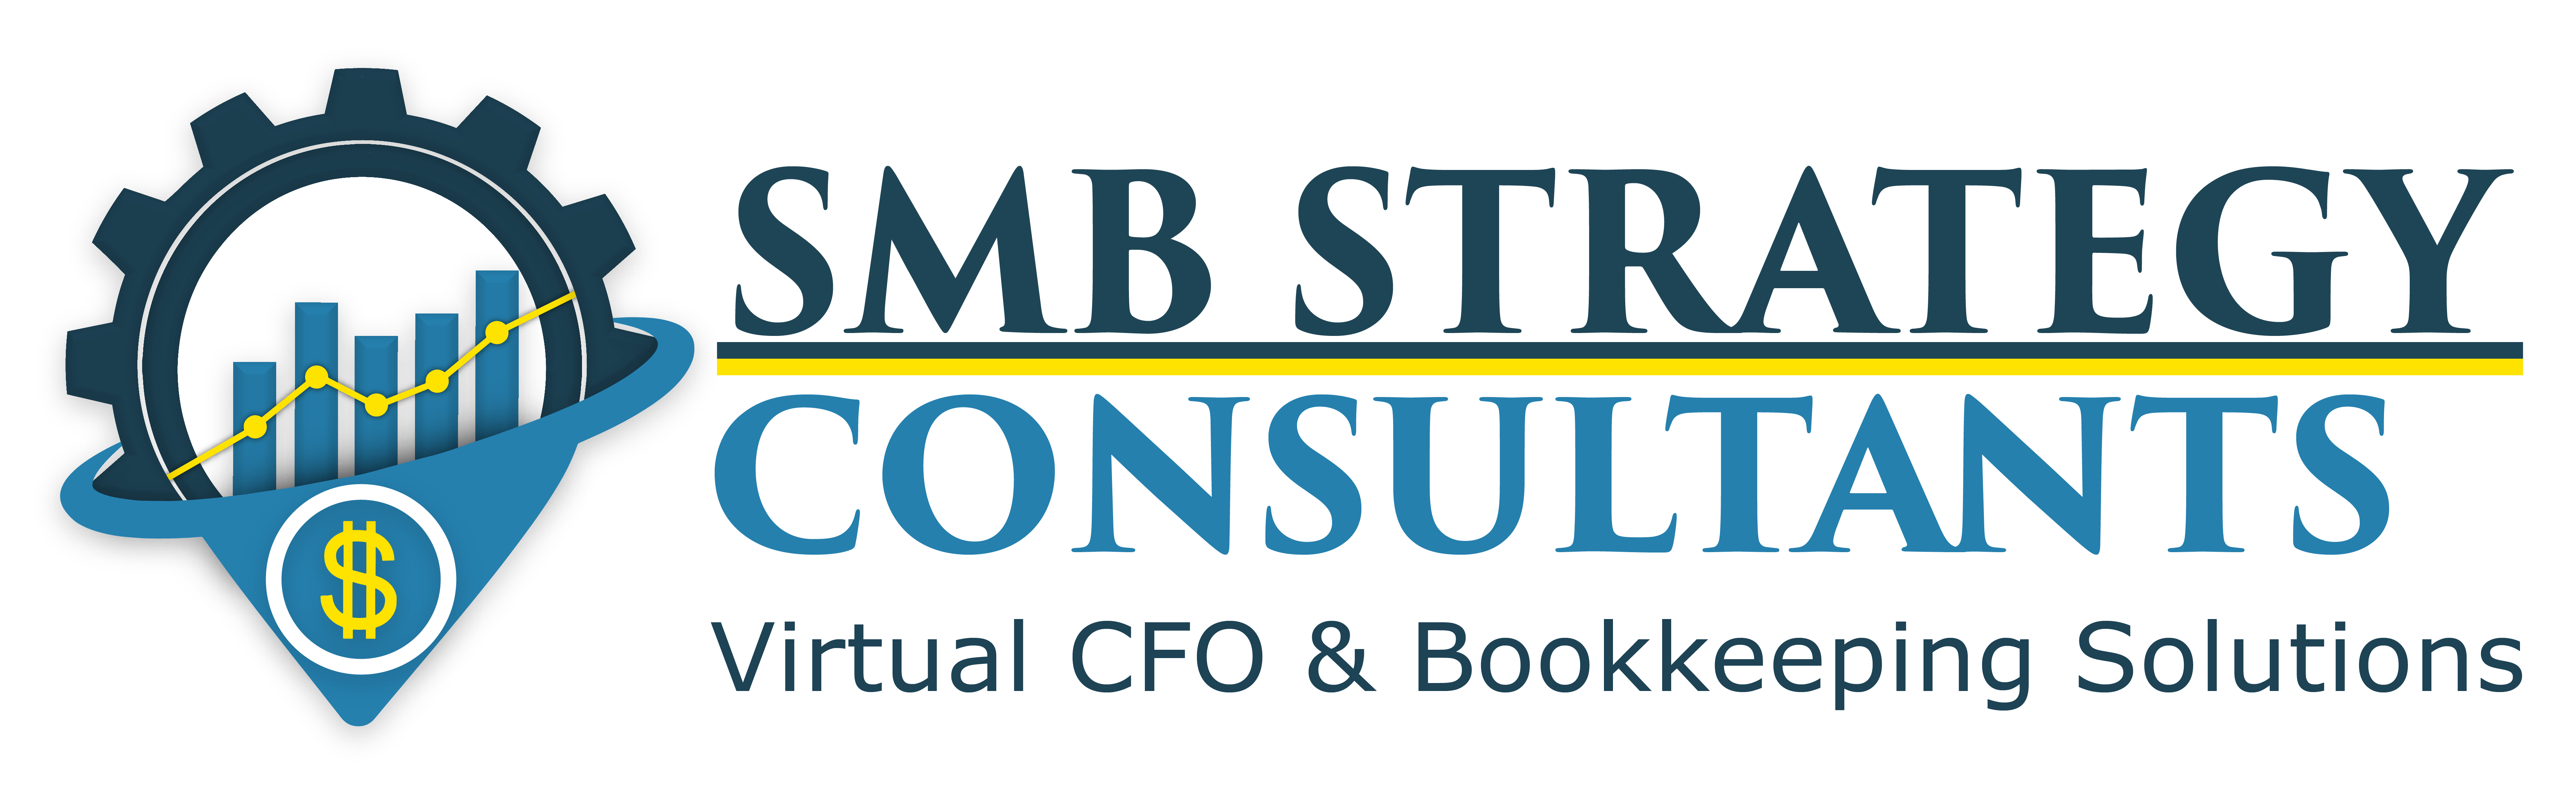 SMB Strategy Consultants LOGO